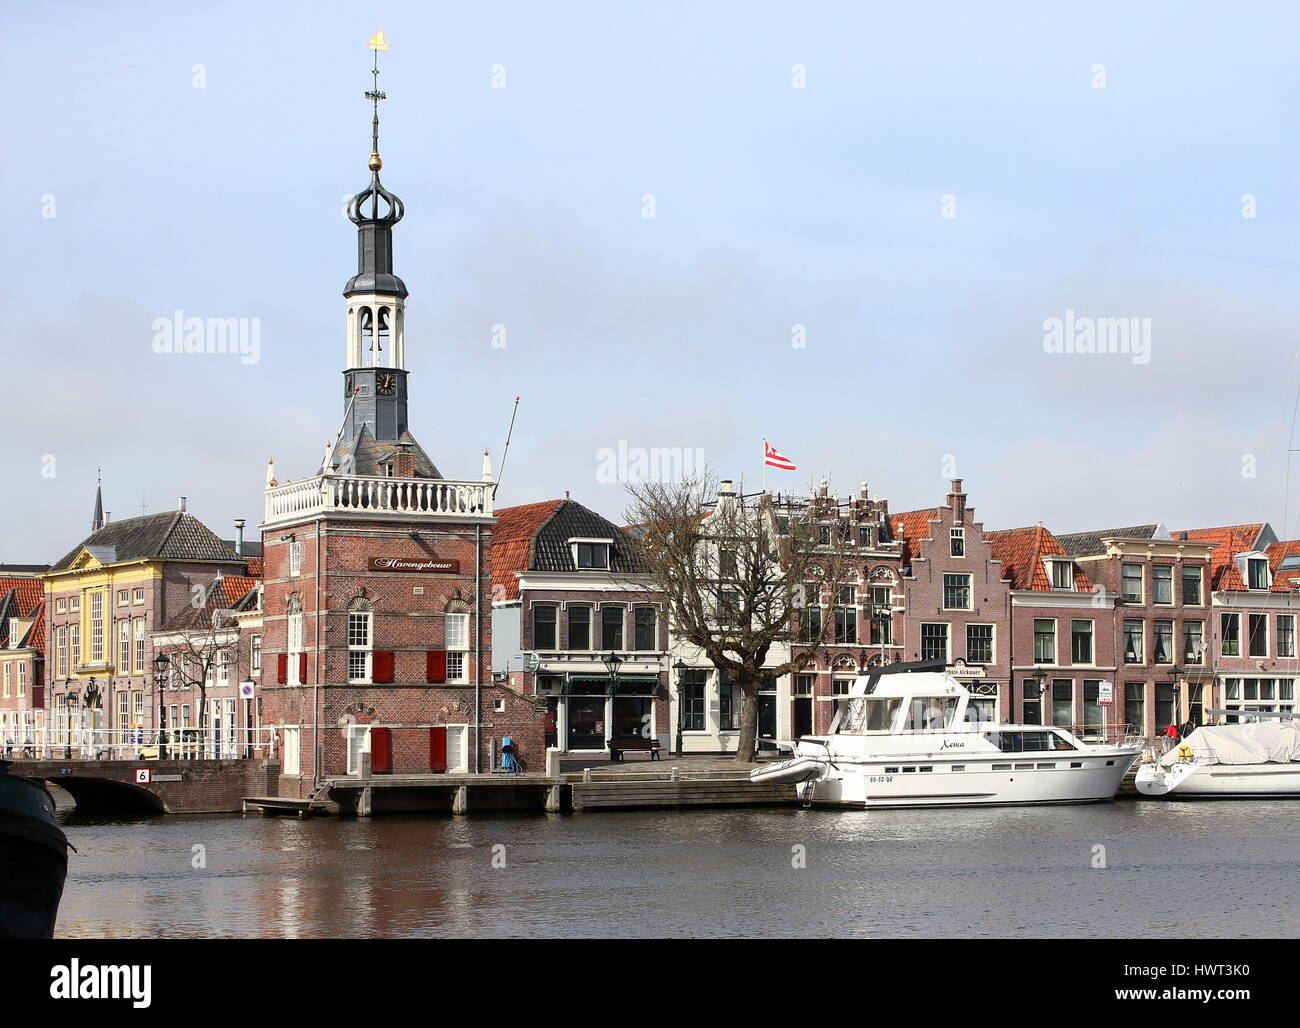 Early 17th century Accijnstoren (excise tax tower) at Bierkade, Alkmaar, Netherlands Stock Photo